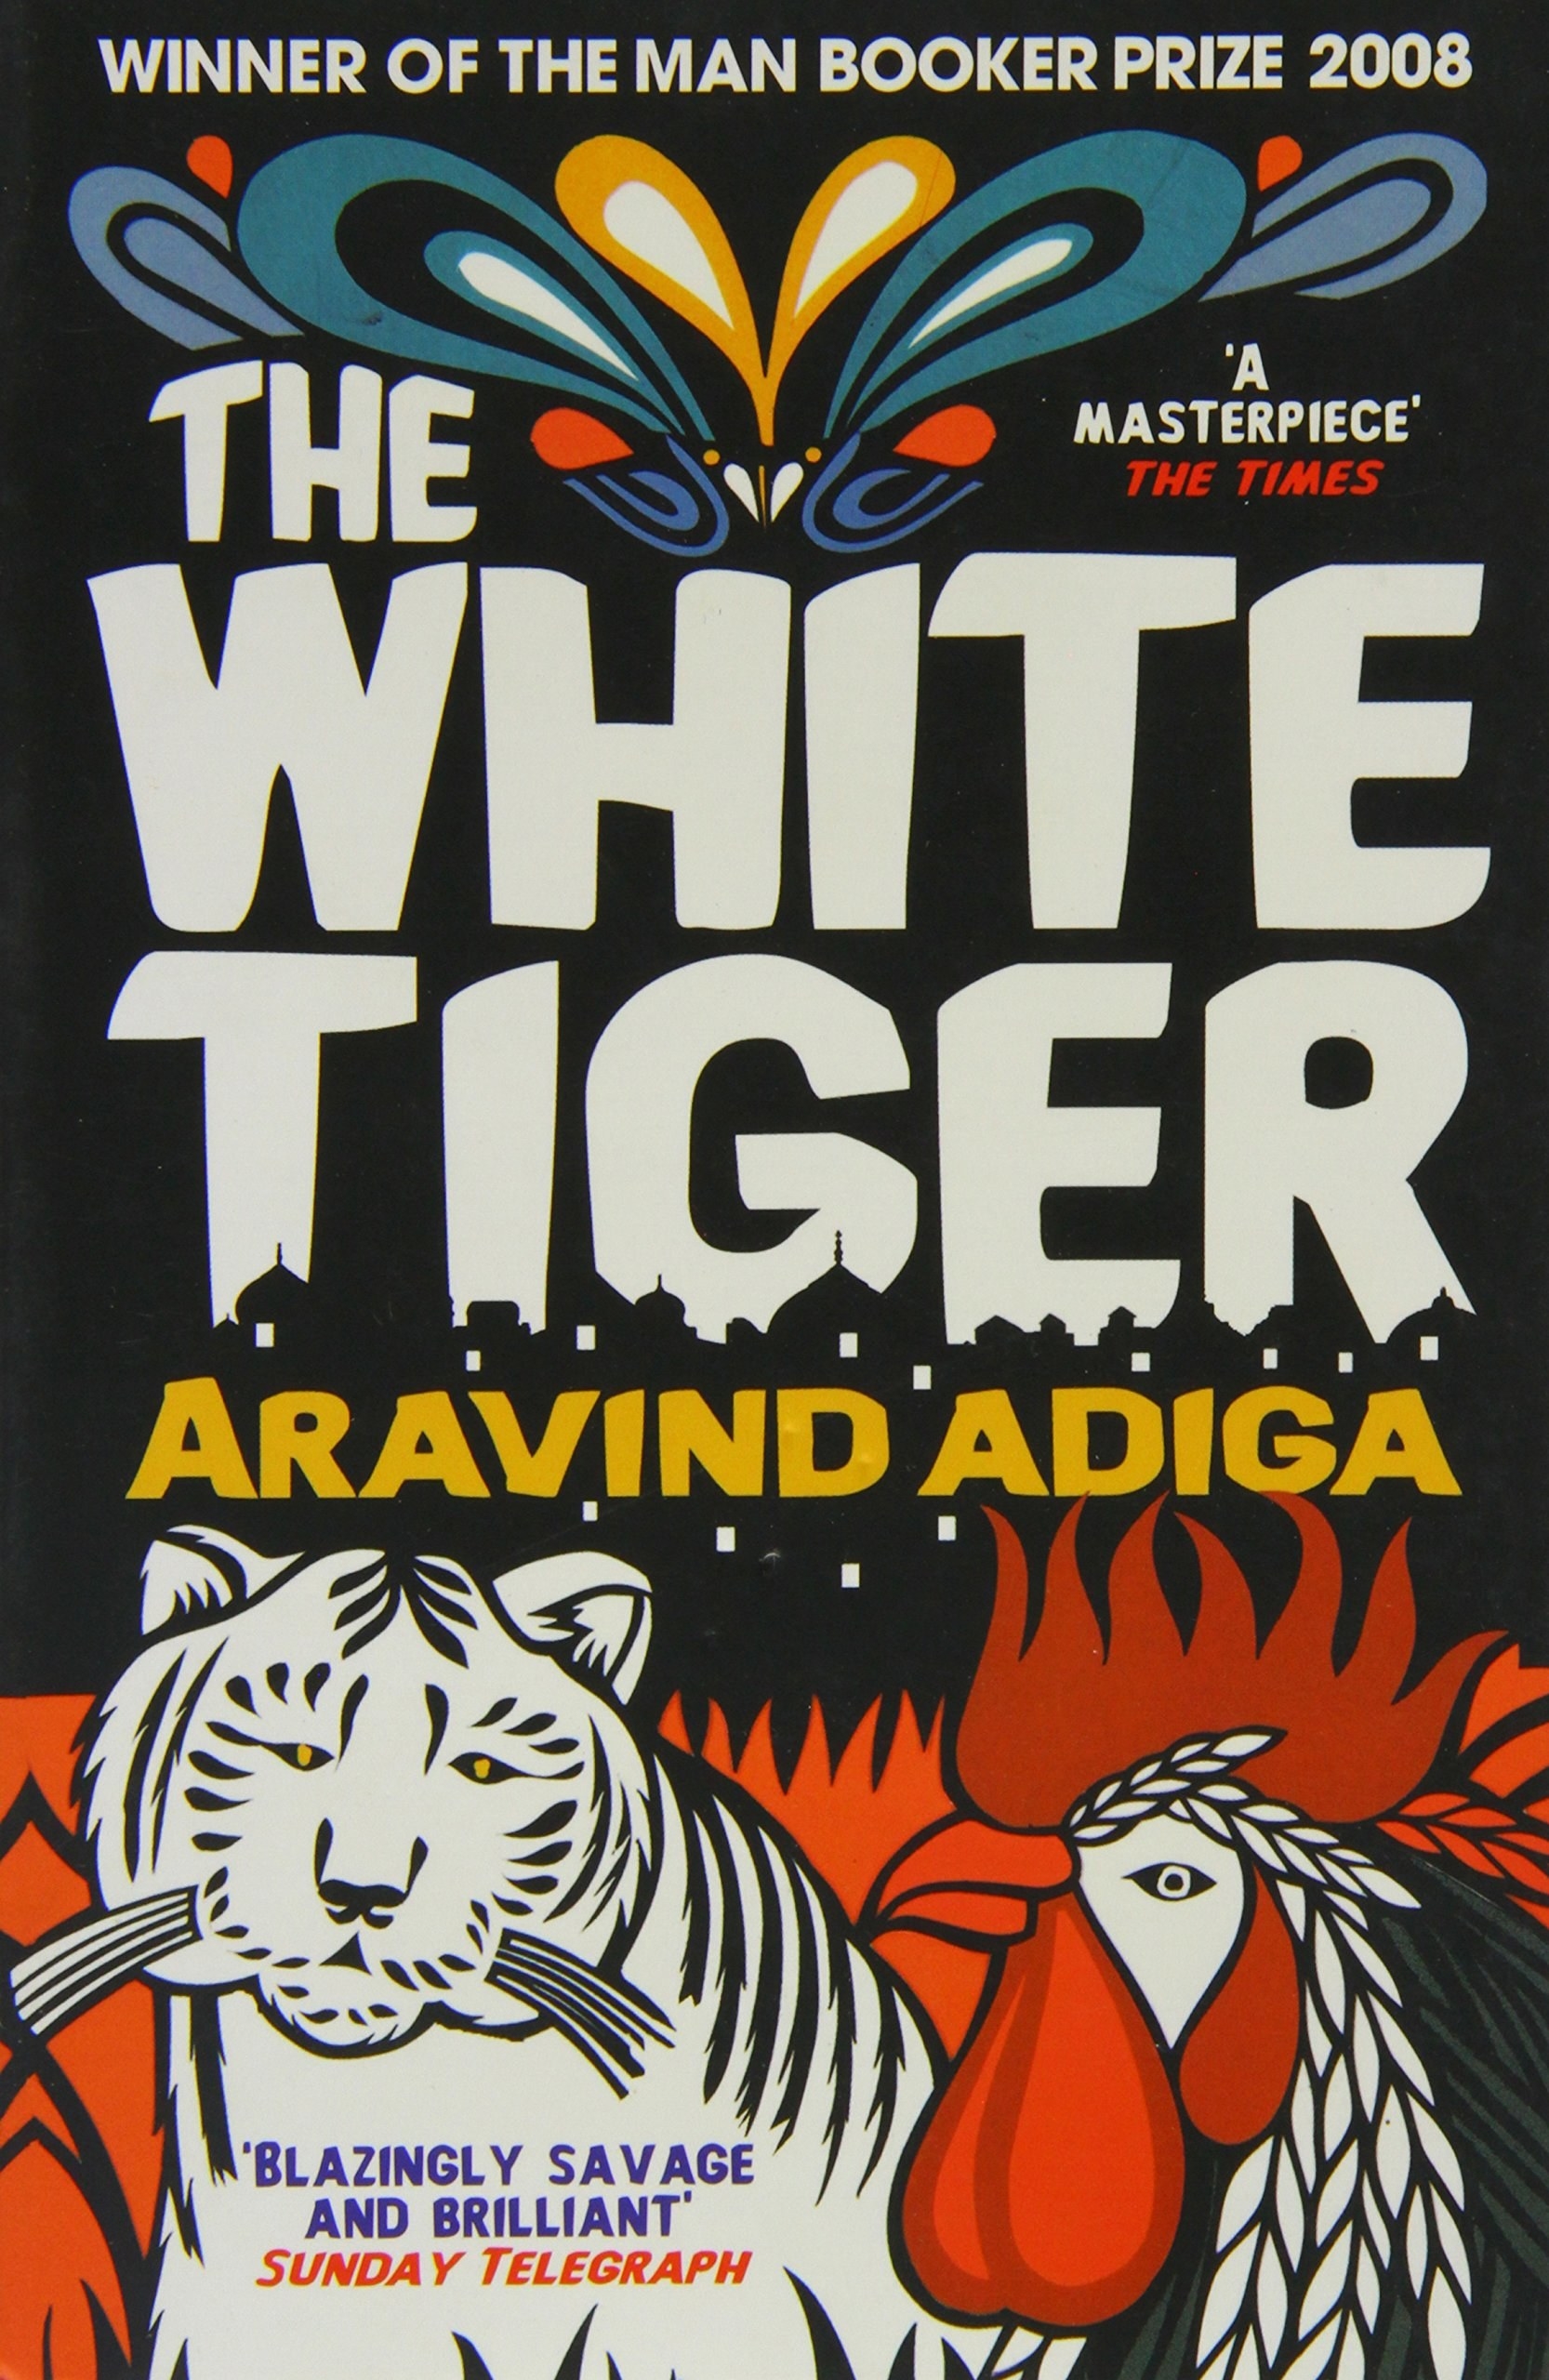 Тайгер книга. Аравинд Адига белый тигр. Книга белый тигр Аравинд Адига. The White Tiger by: Aravind Adiga. Аравинд Адига белый тигр обложка книги.